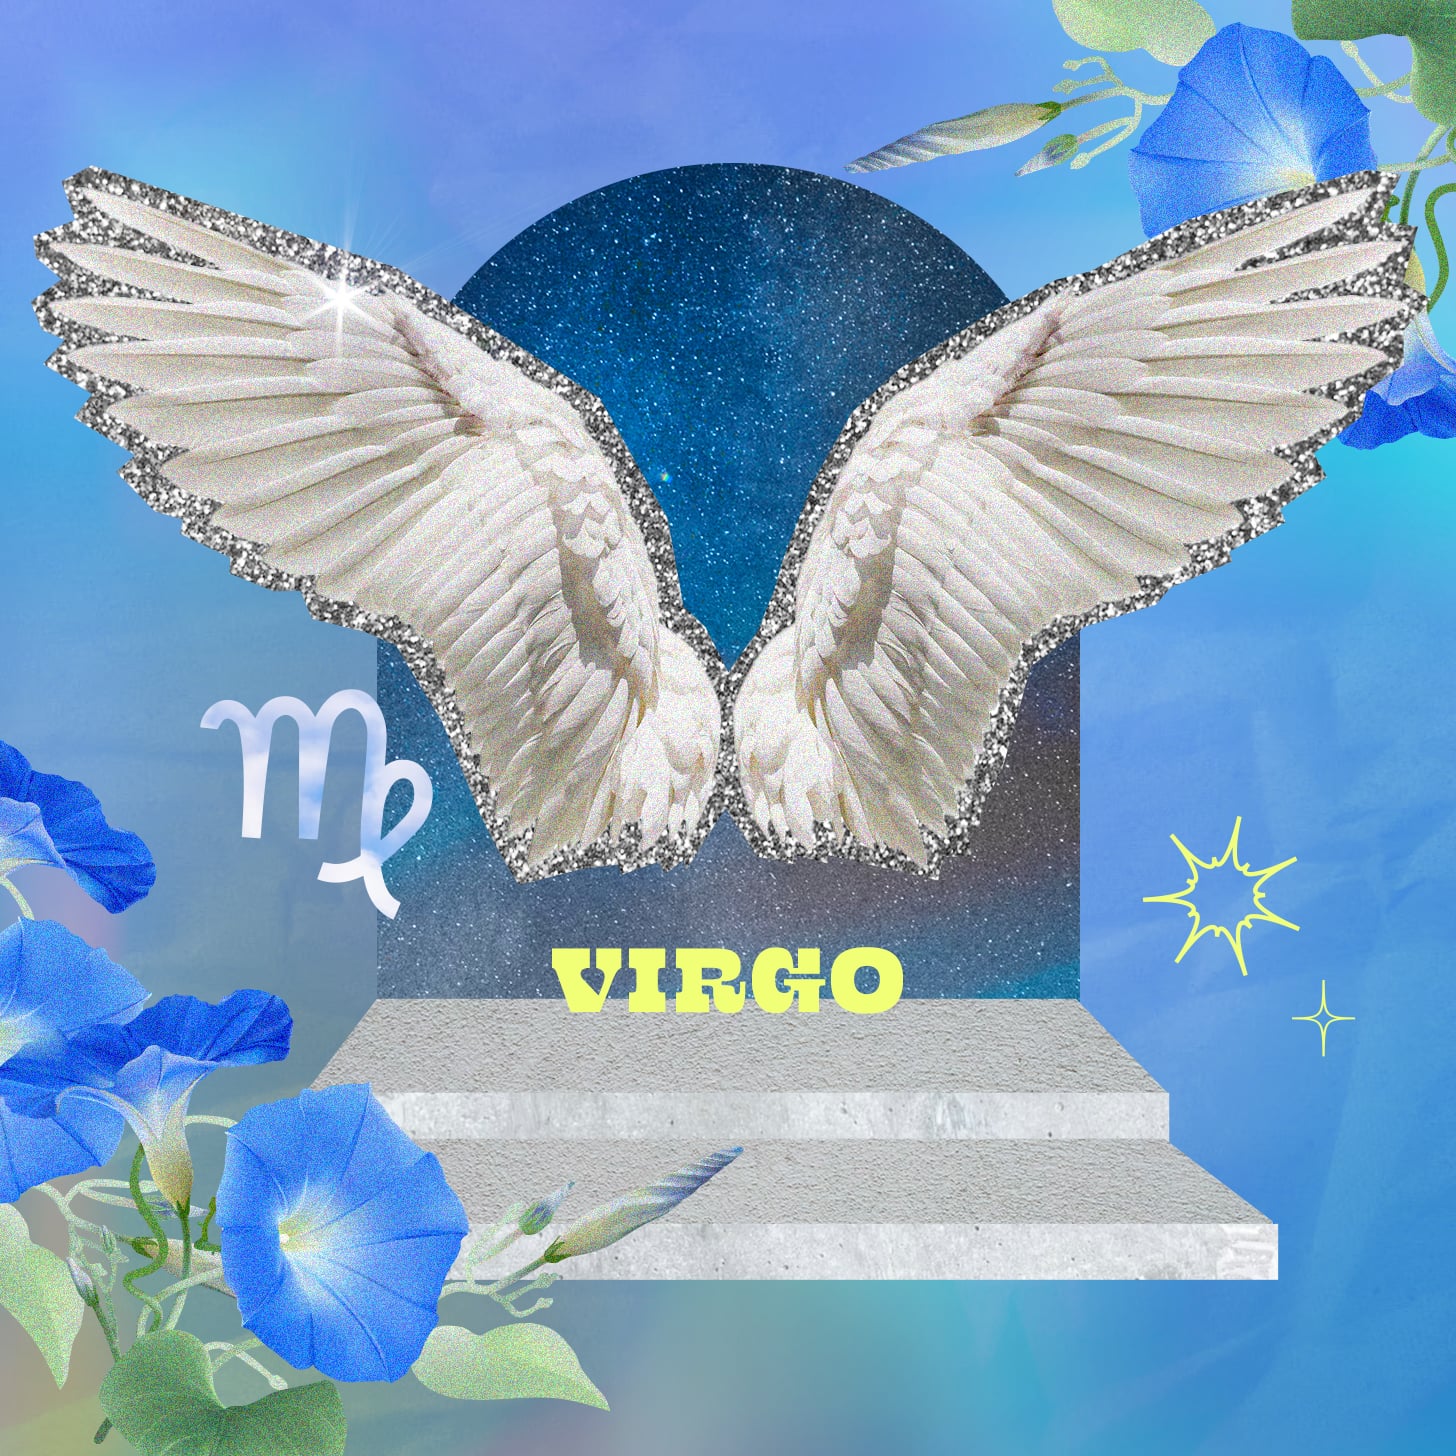 Virgo weekly horoscope for July 31, 2022